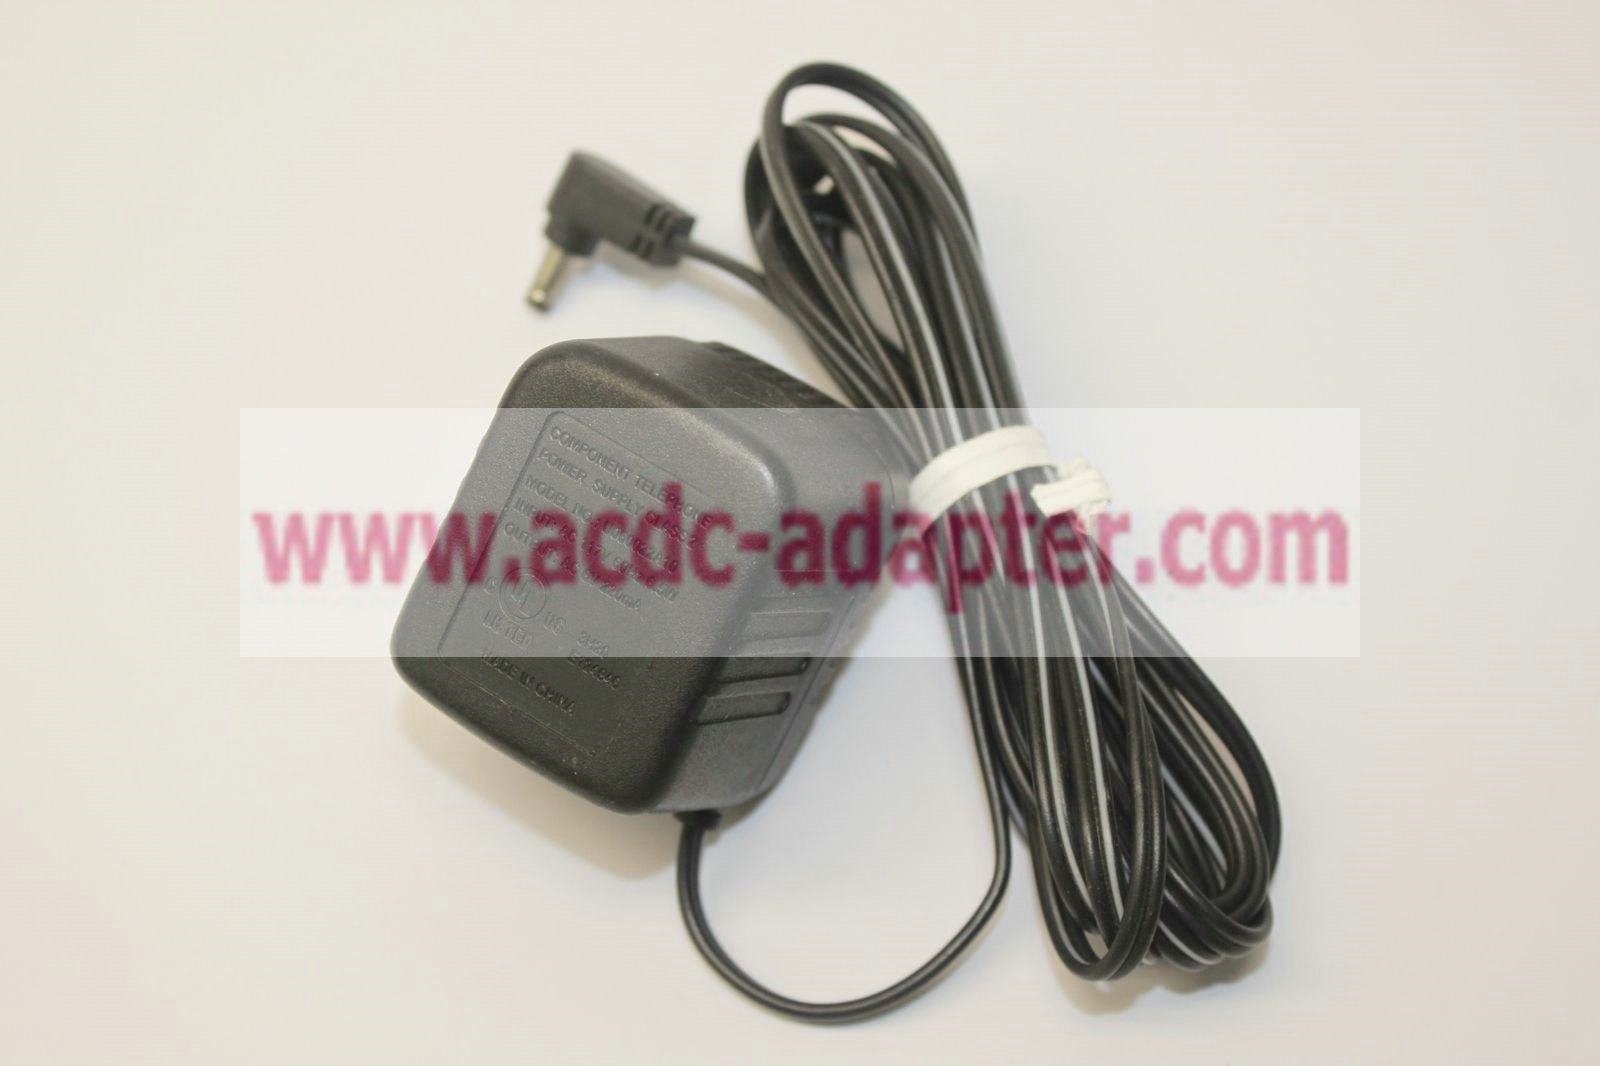 New Component Telephone AC6V 220mA U060022A10 AC Adapter Class 2 Power Supply - Click Image to Close